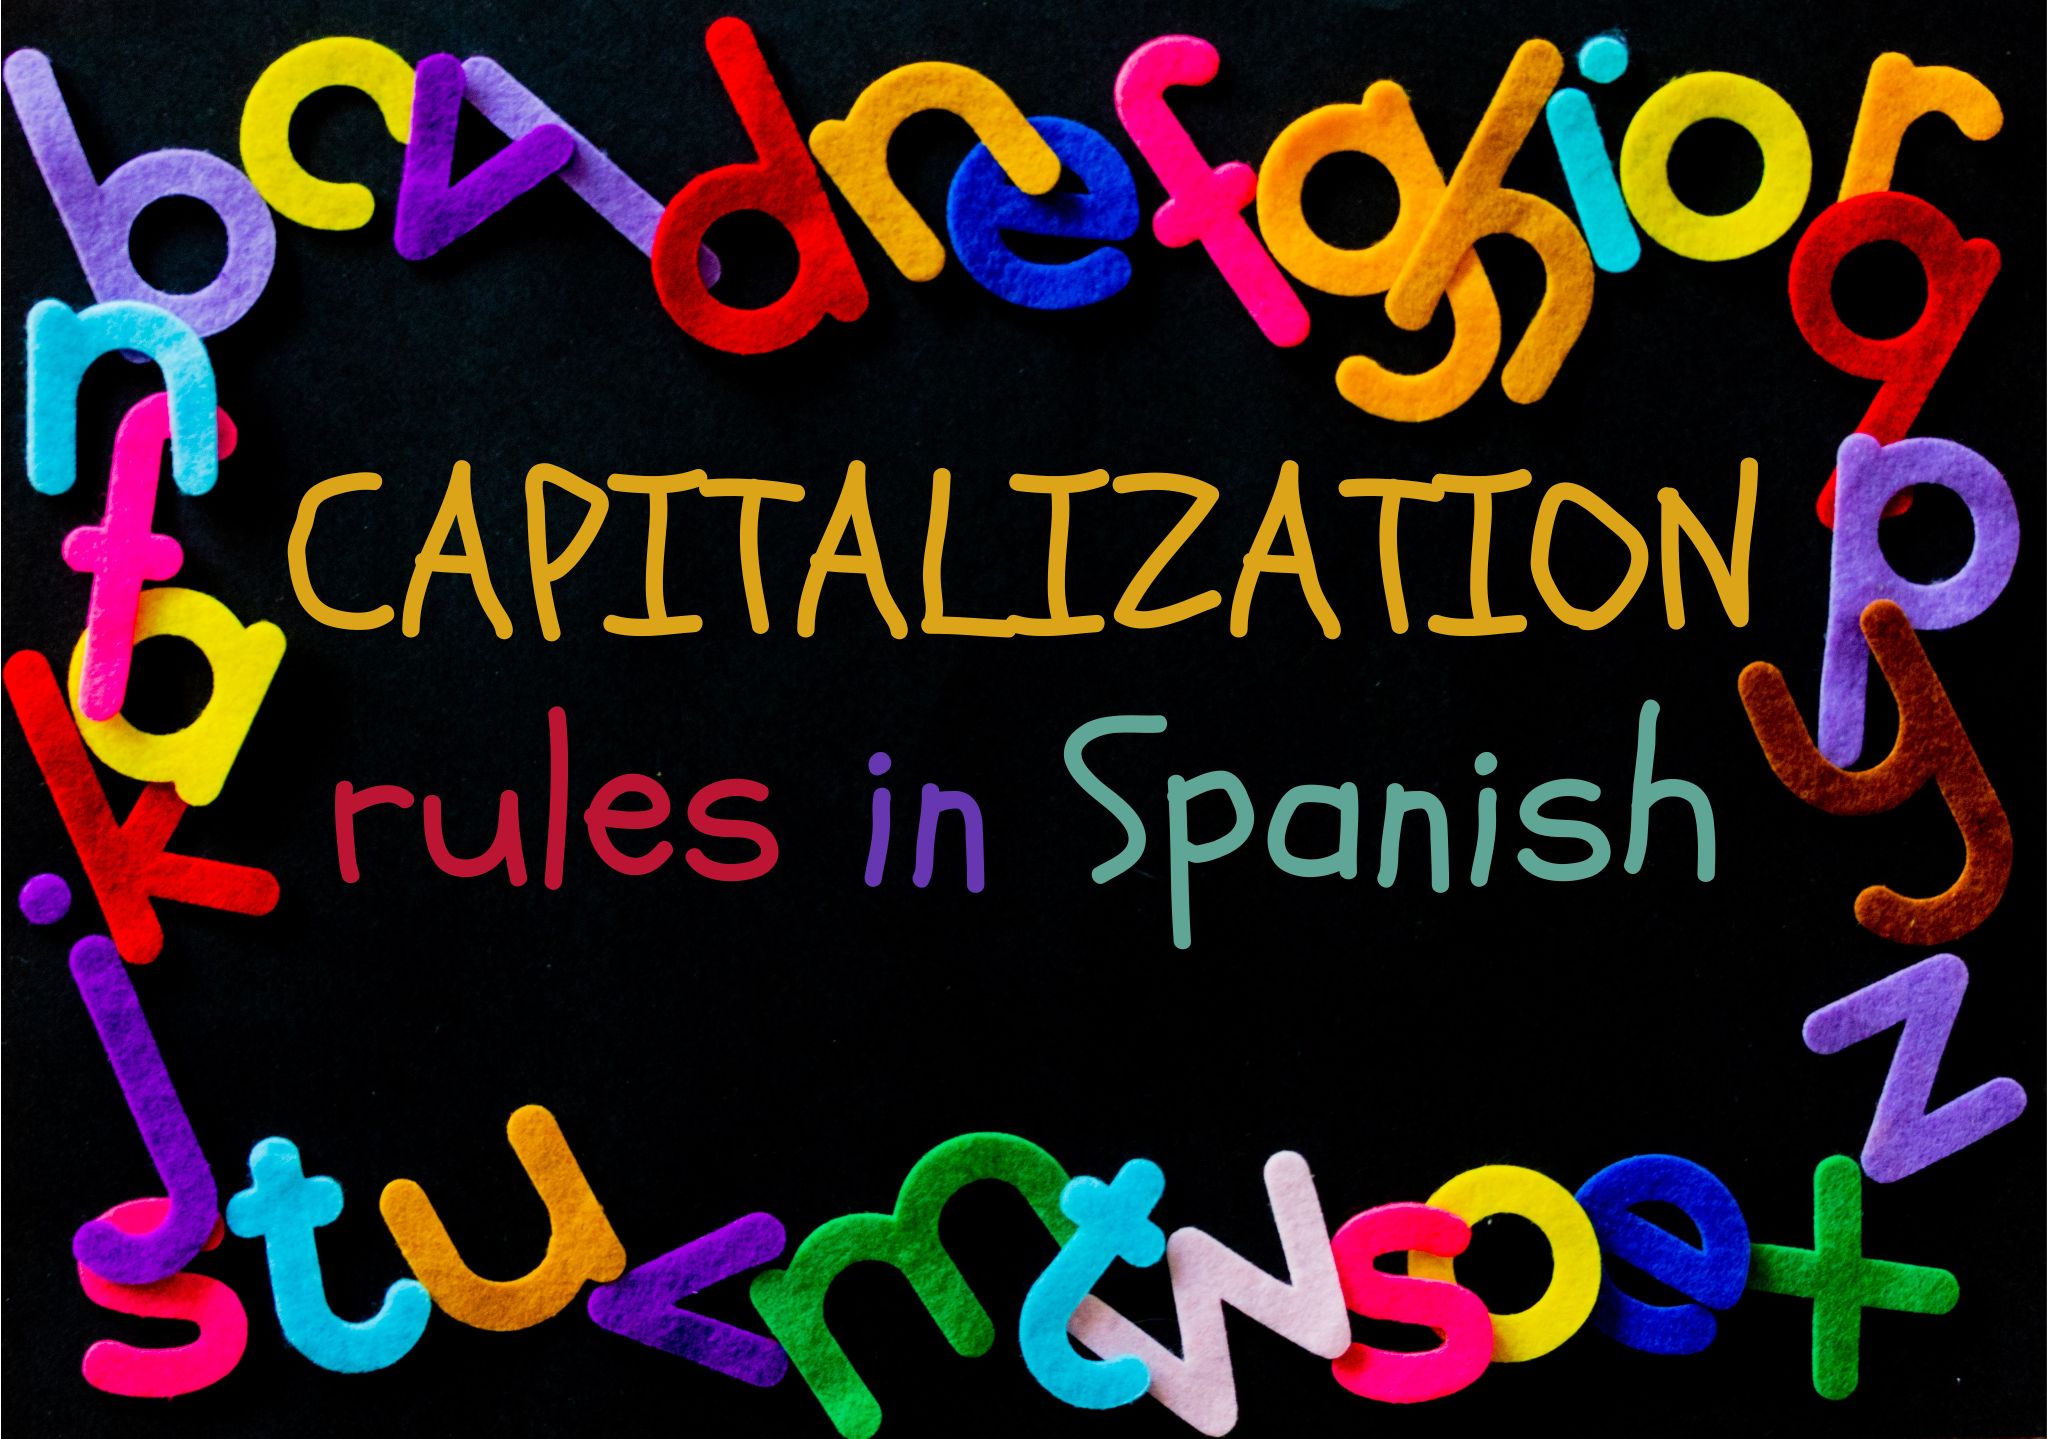 Capitalization rules in Spanish